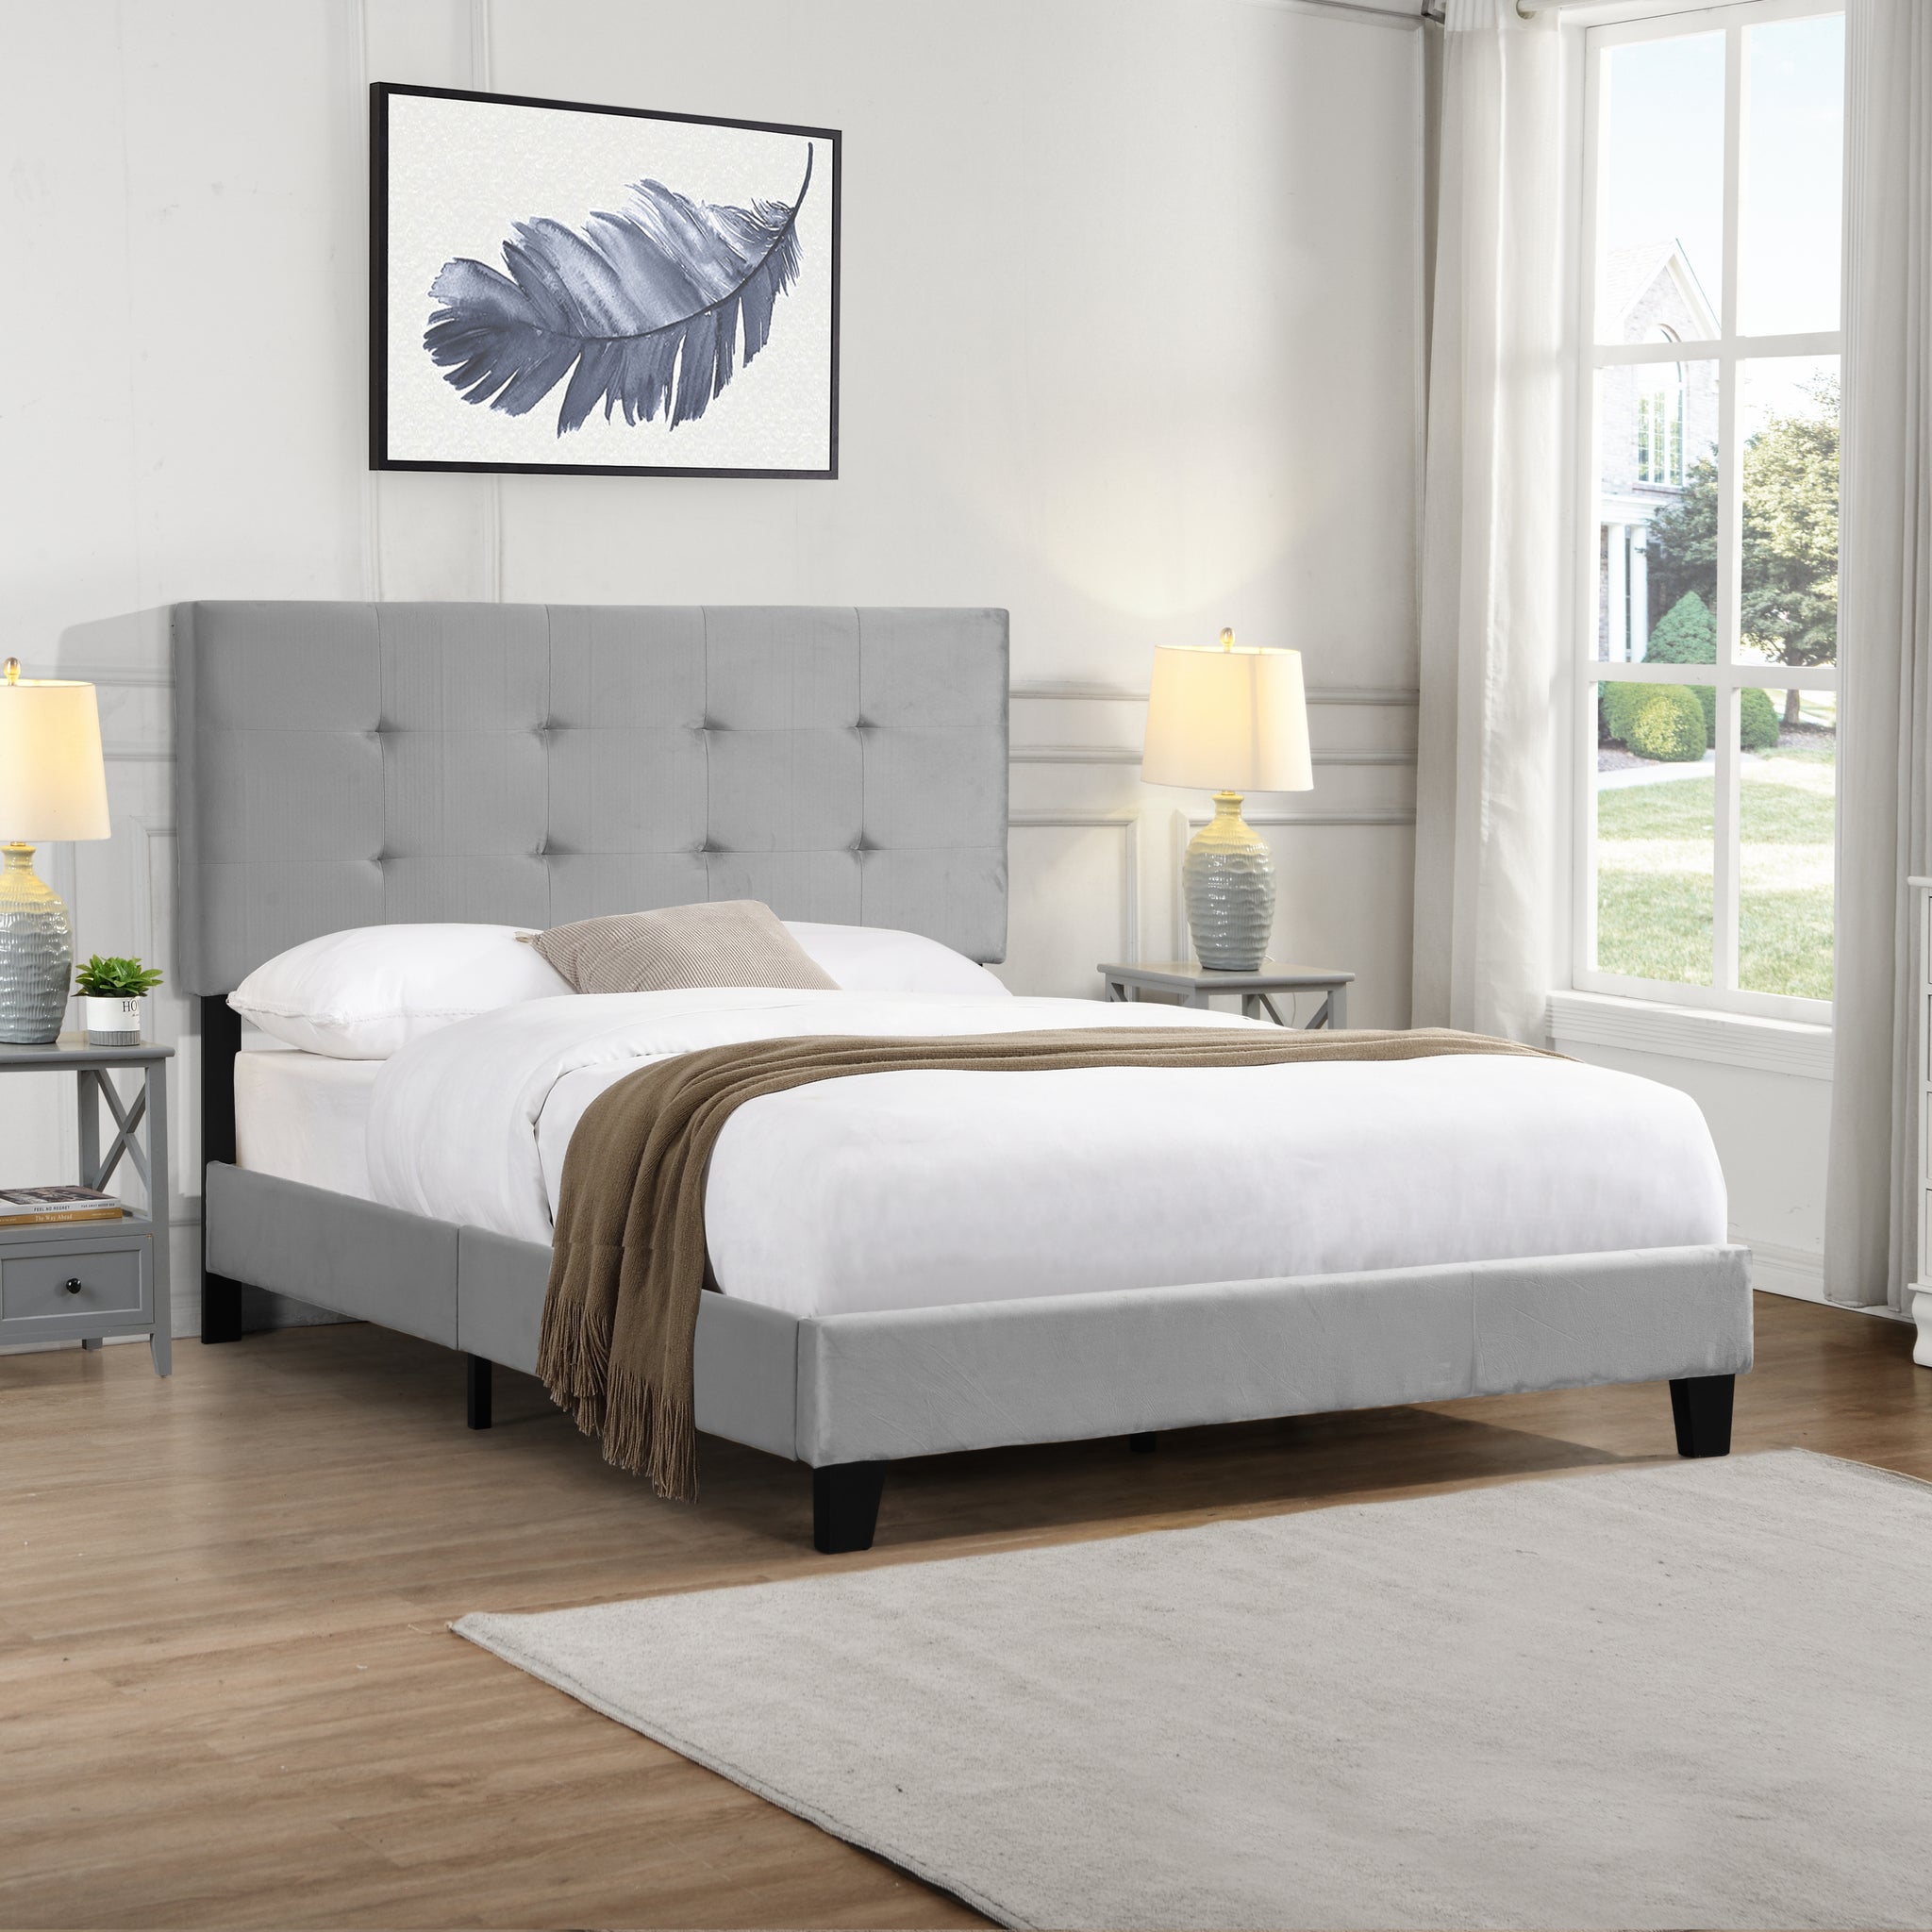 Queen Size Upholstered Platform Bed Frame with pull gray-velvet